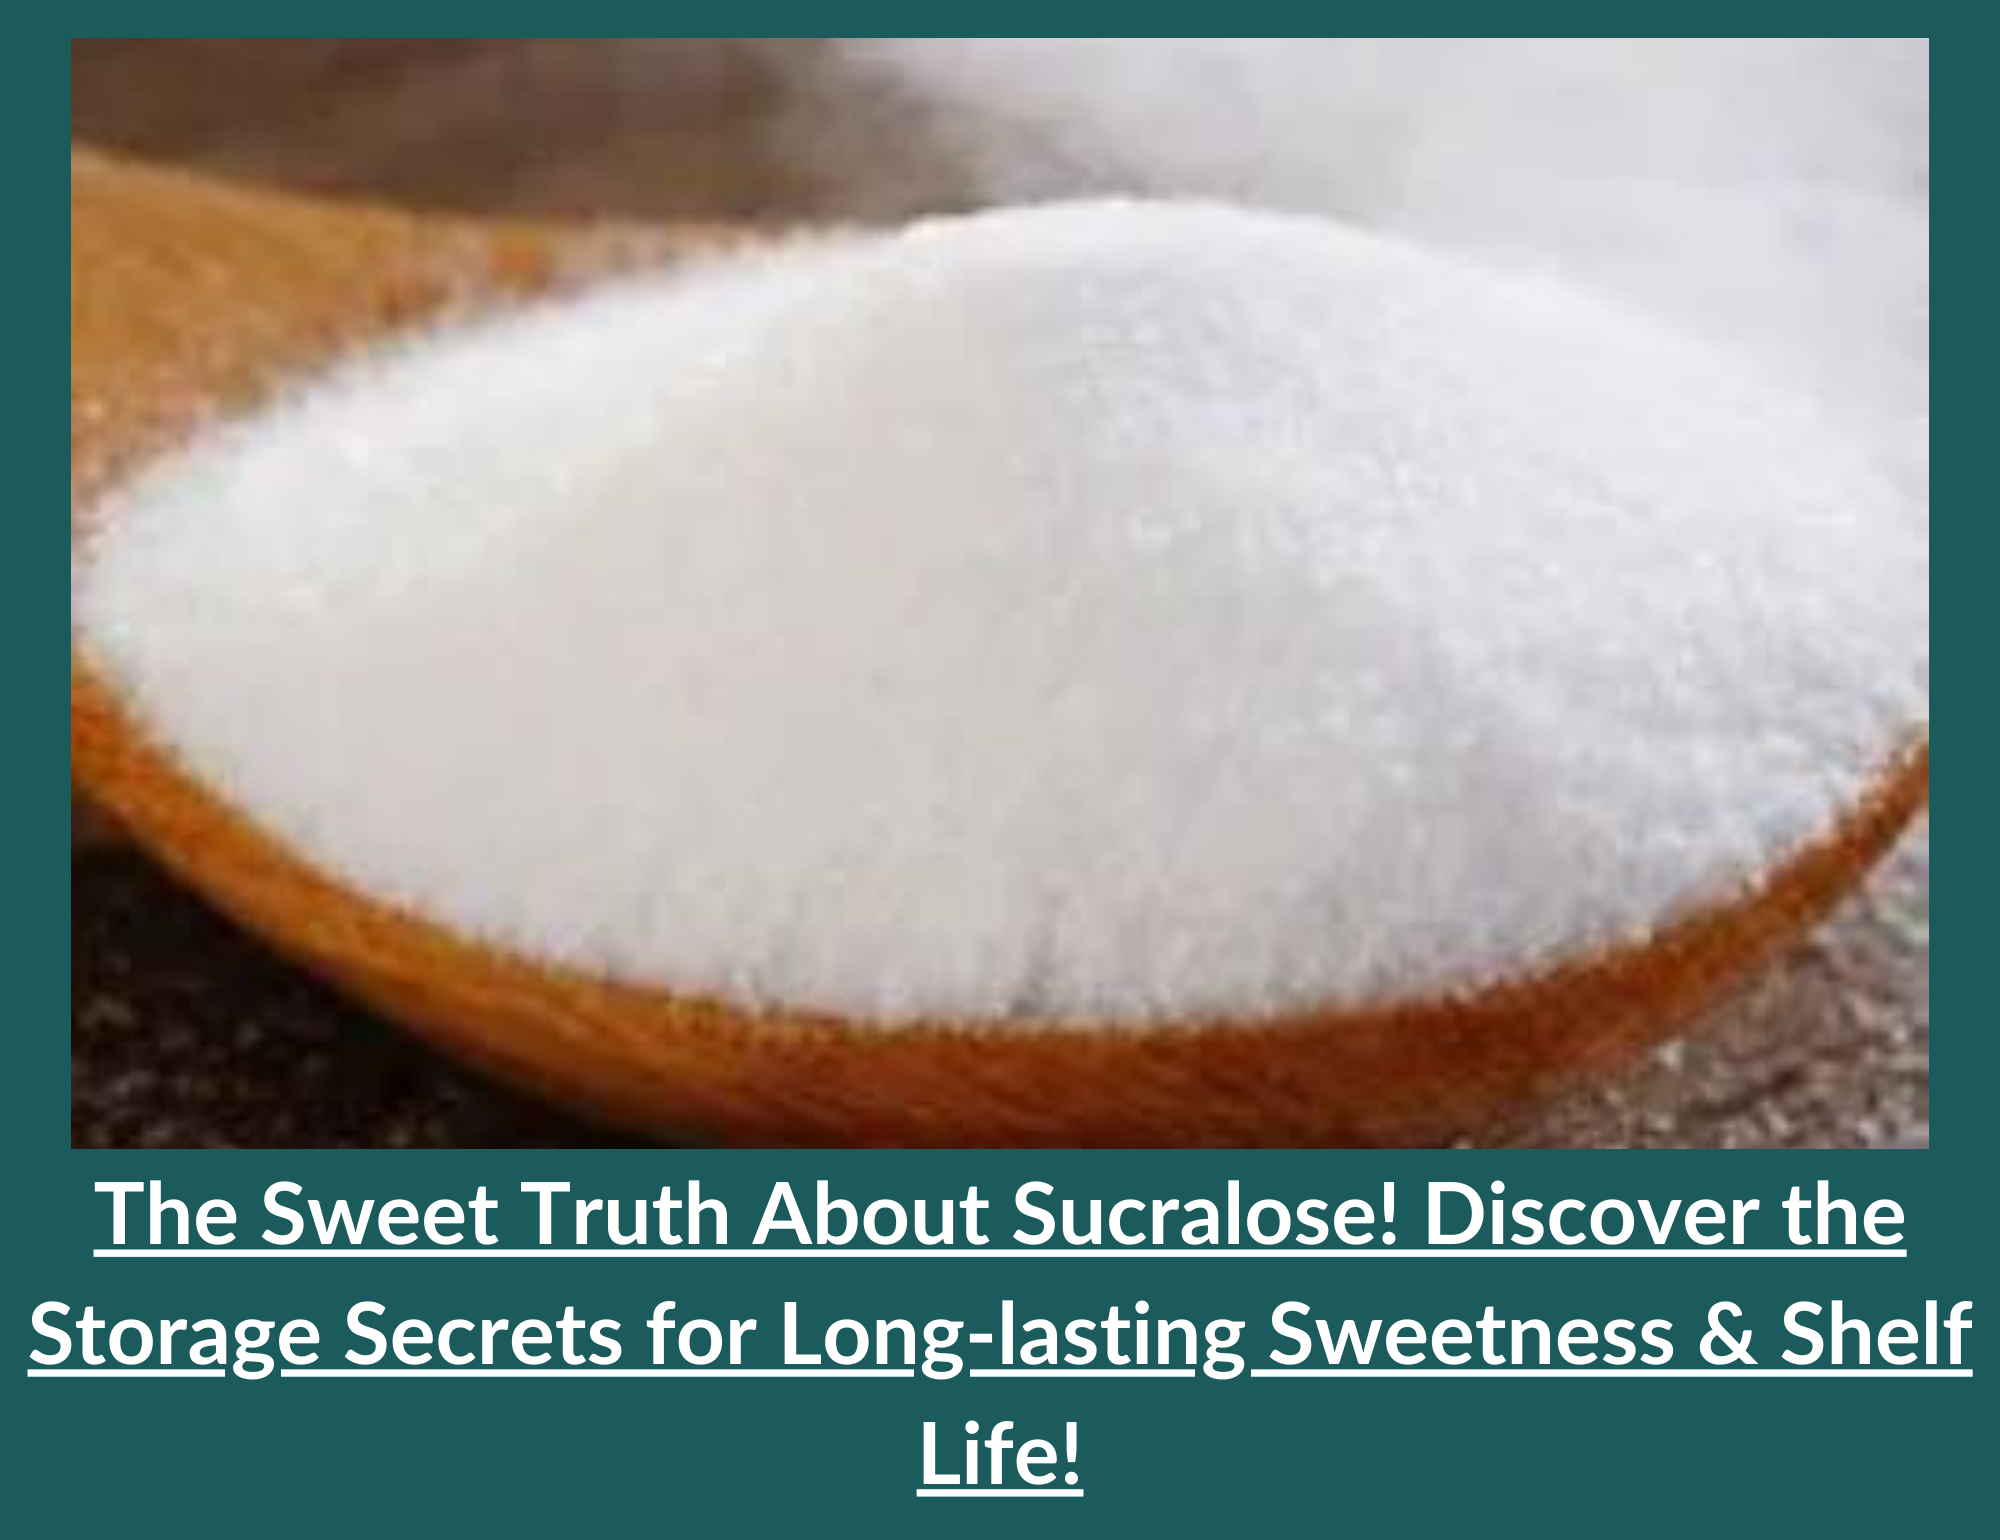 Sucralose Shelf life and Sweetness